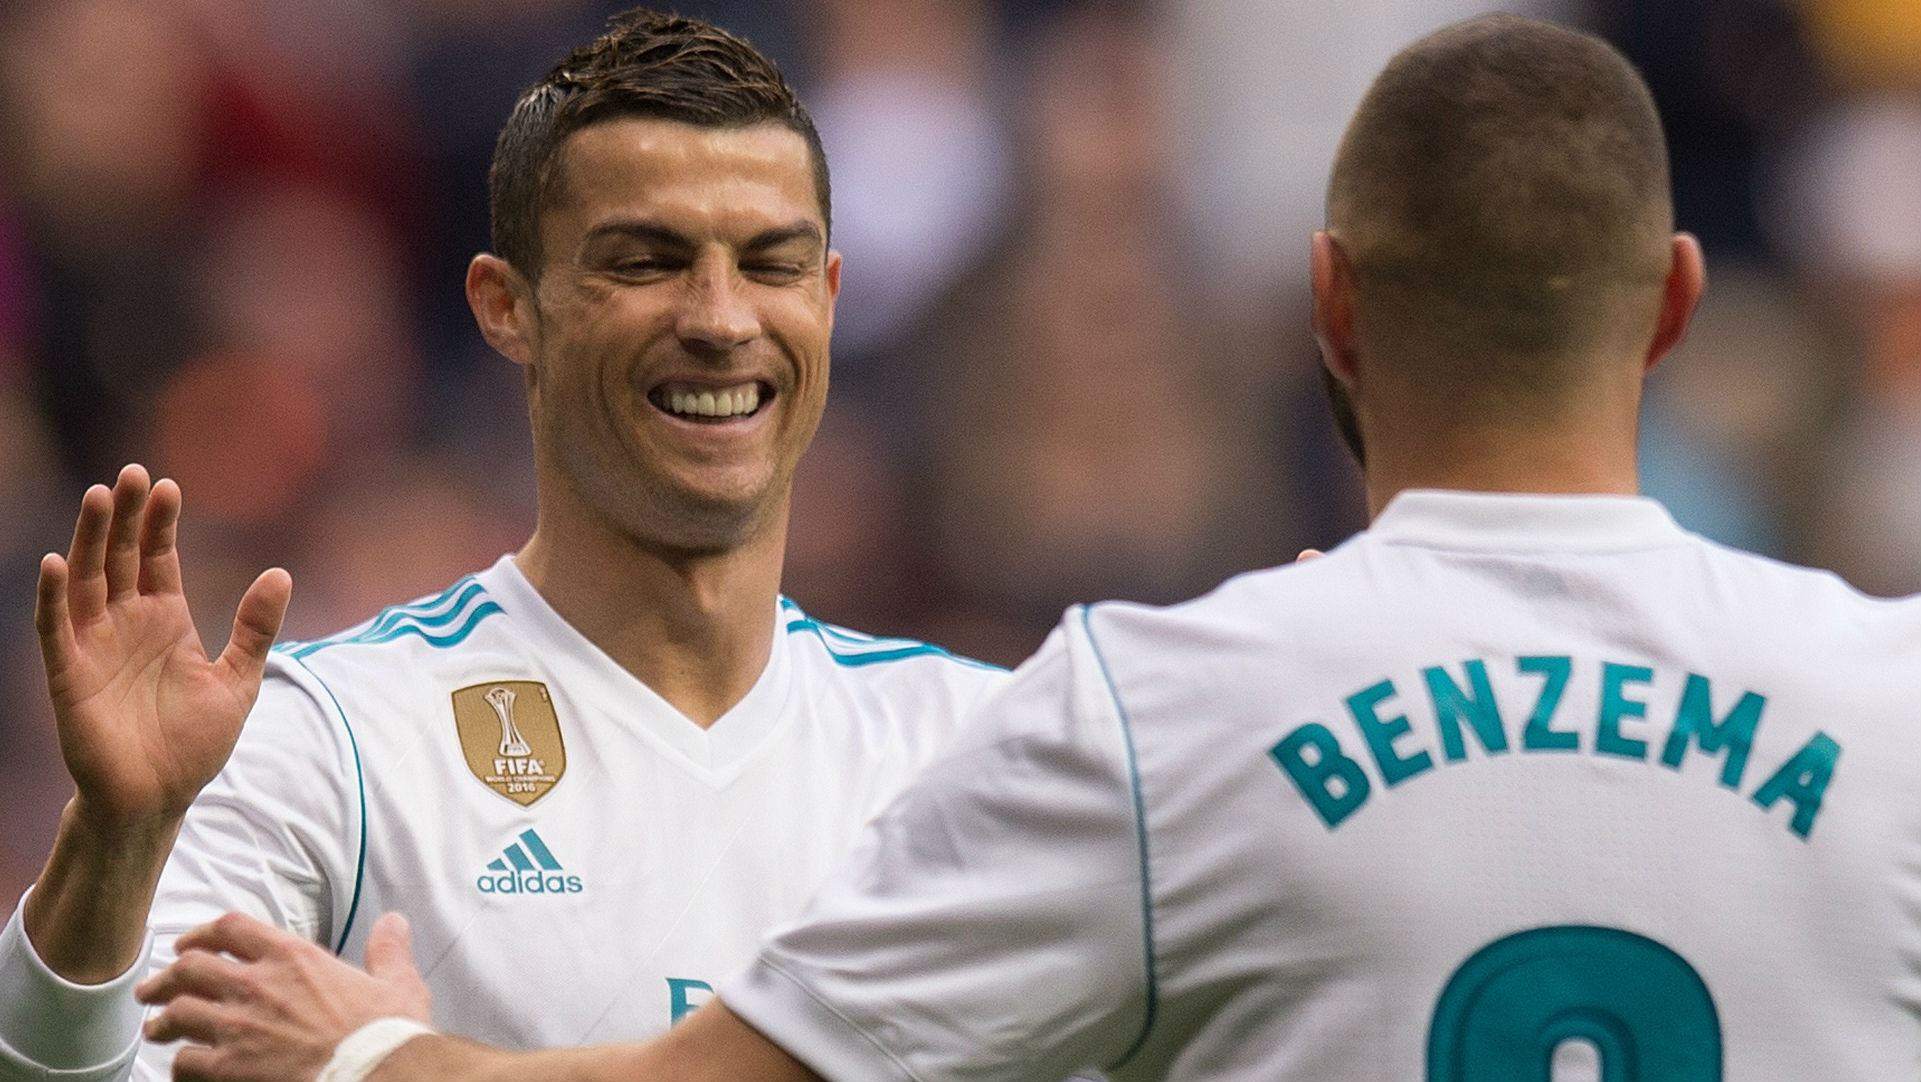 Blessure de Benzema, le Real Madrid pense à un retour de Cristiano Ronaldo (SPORT)